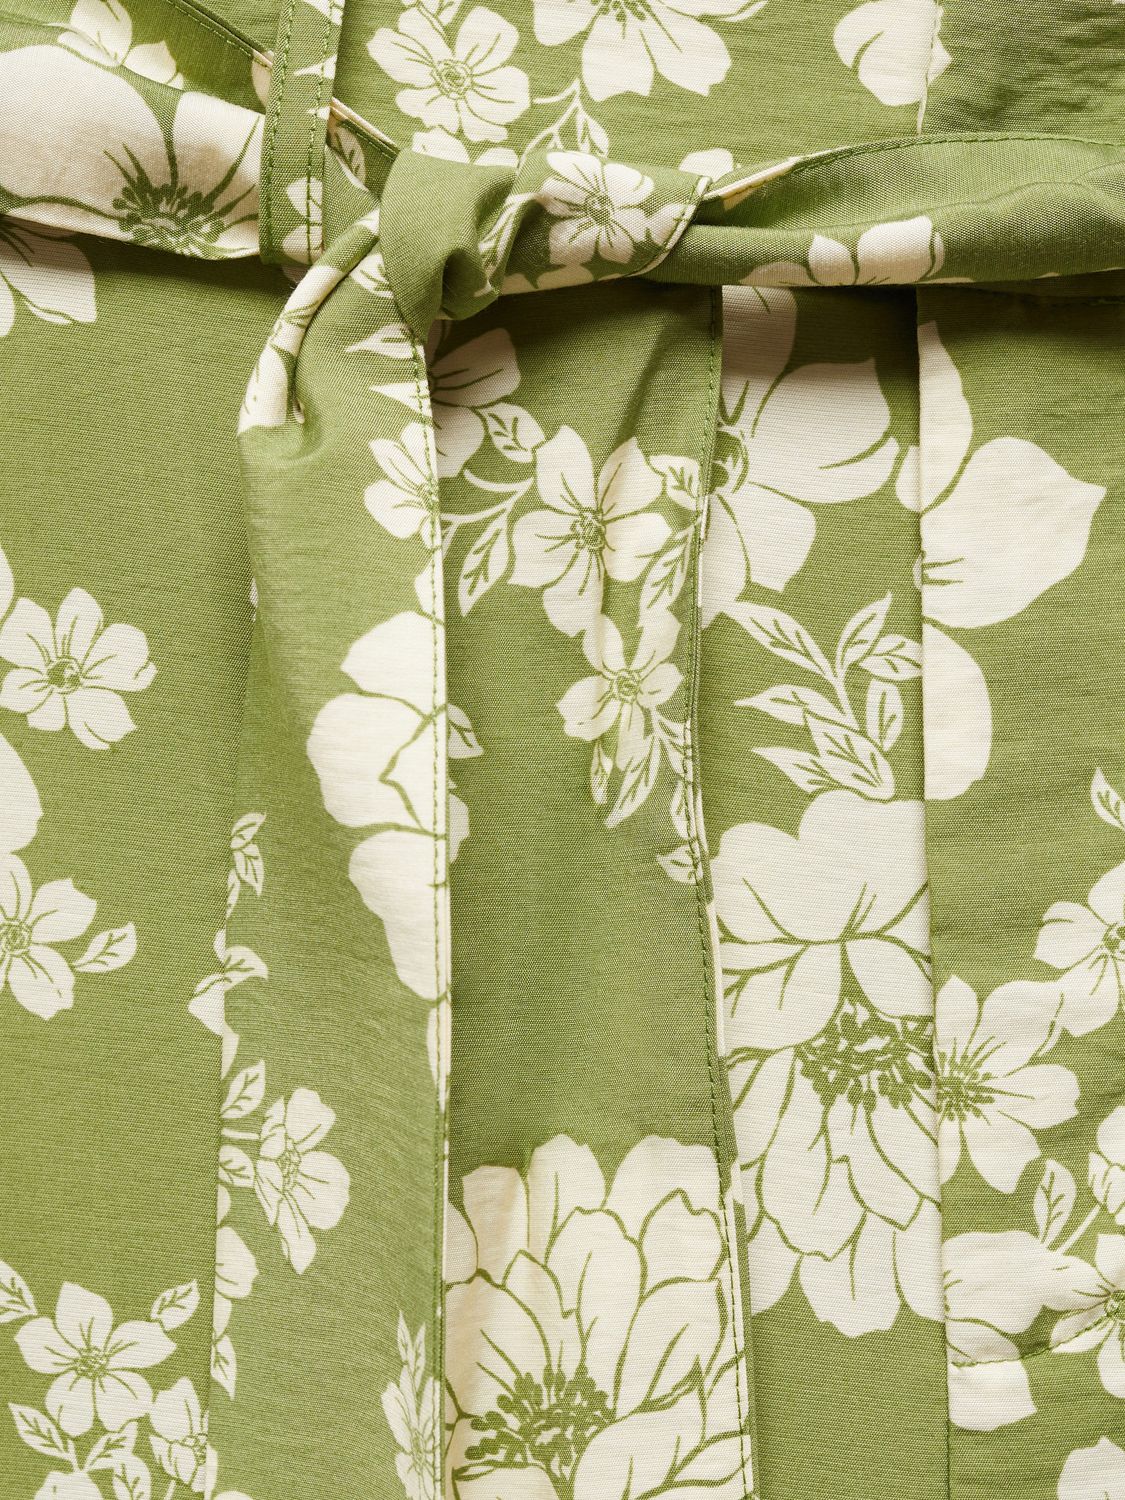 Mango Plumas Bow Floral Print Trousers, Green/Multi, XXXL